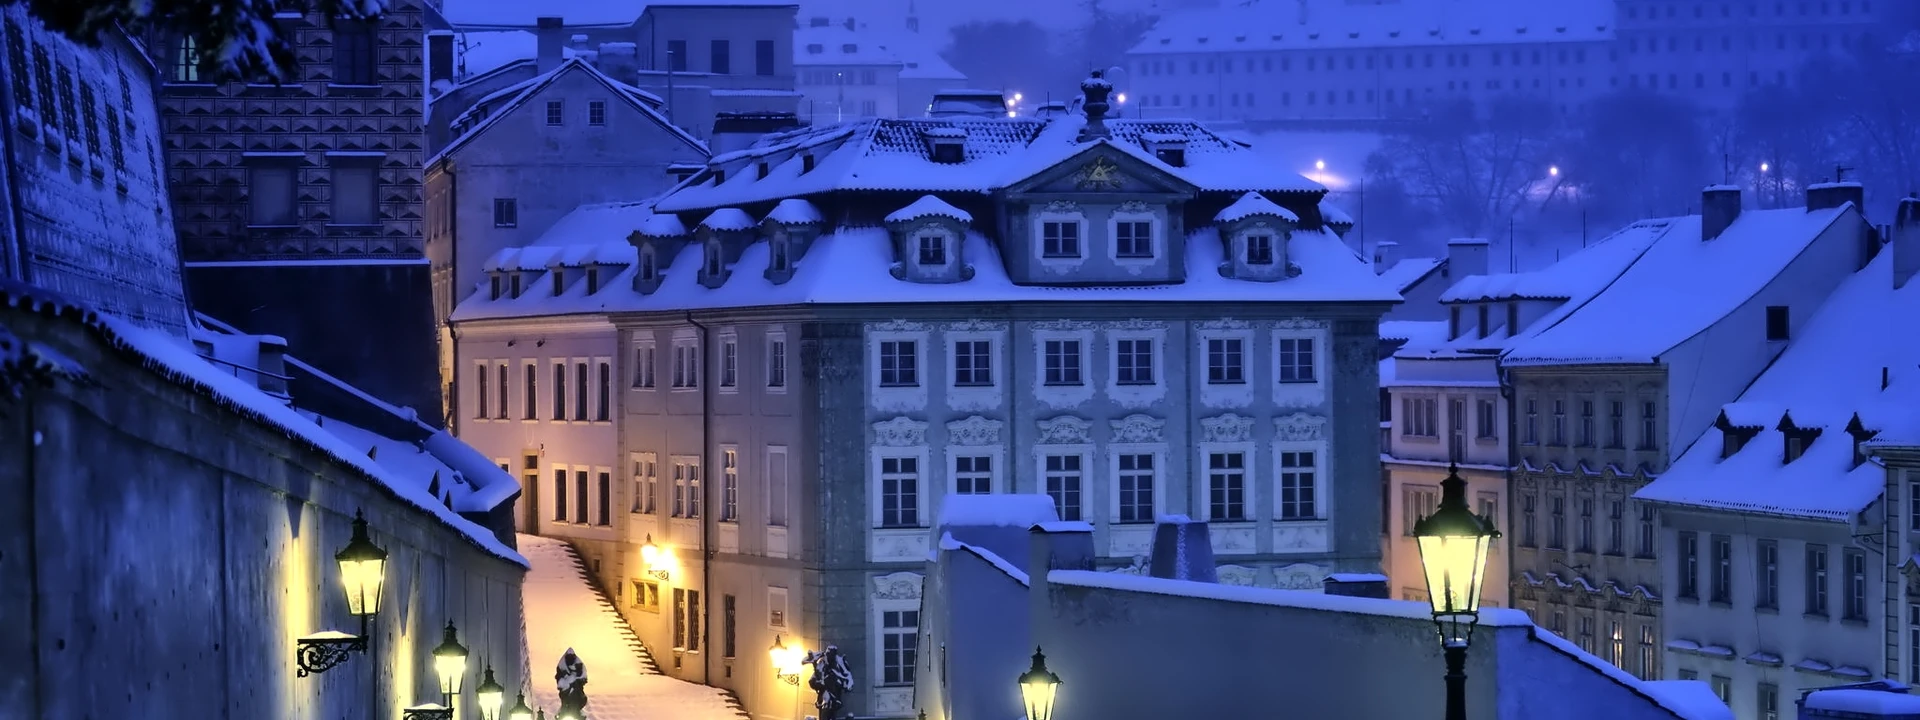 Winter in Prague? Best time to visit us at Botanique Hotel Prague!